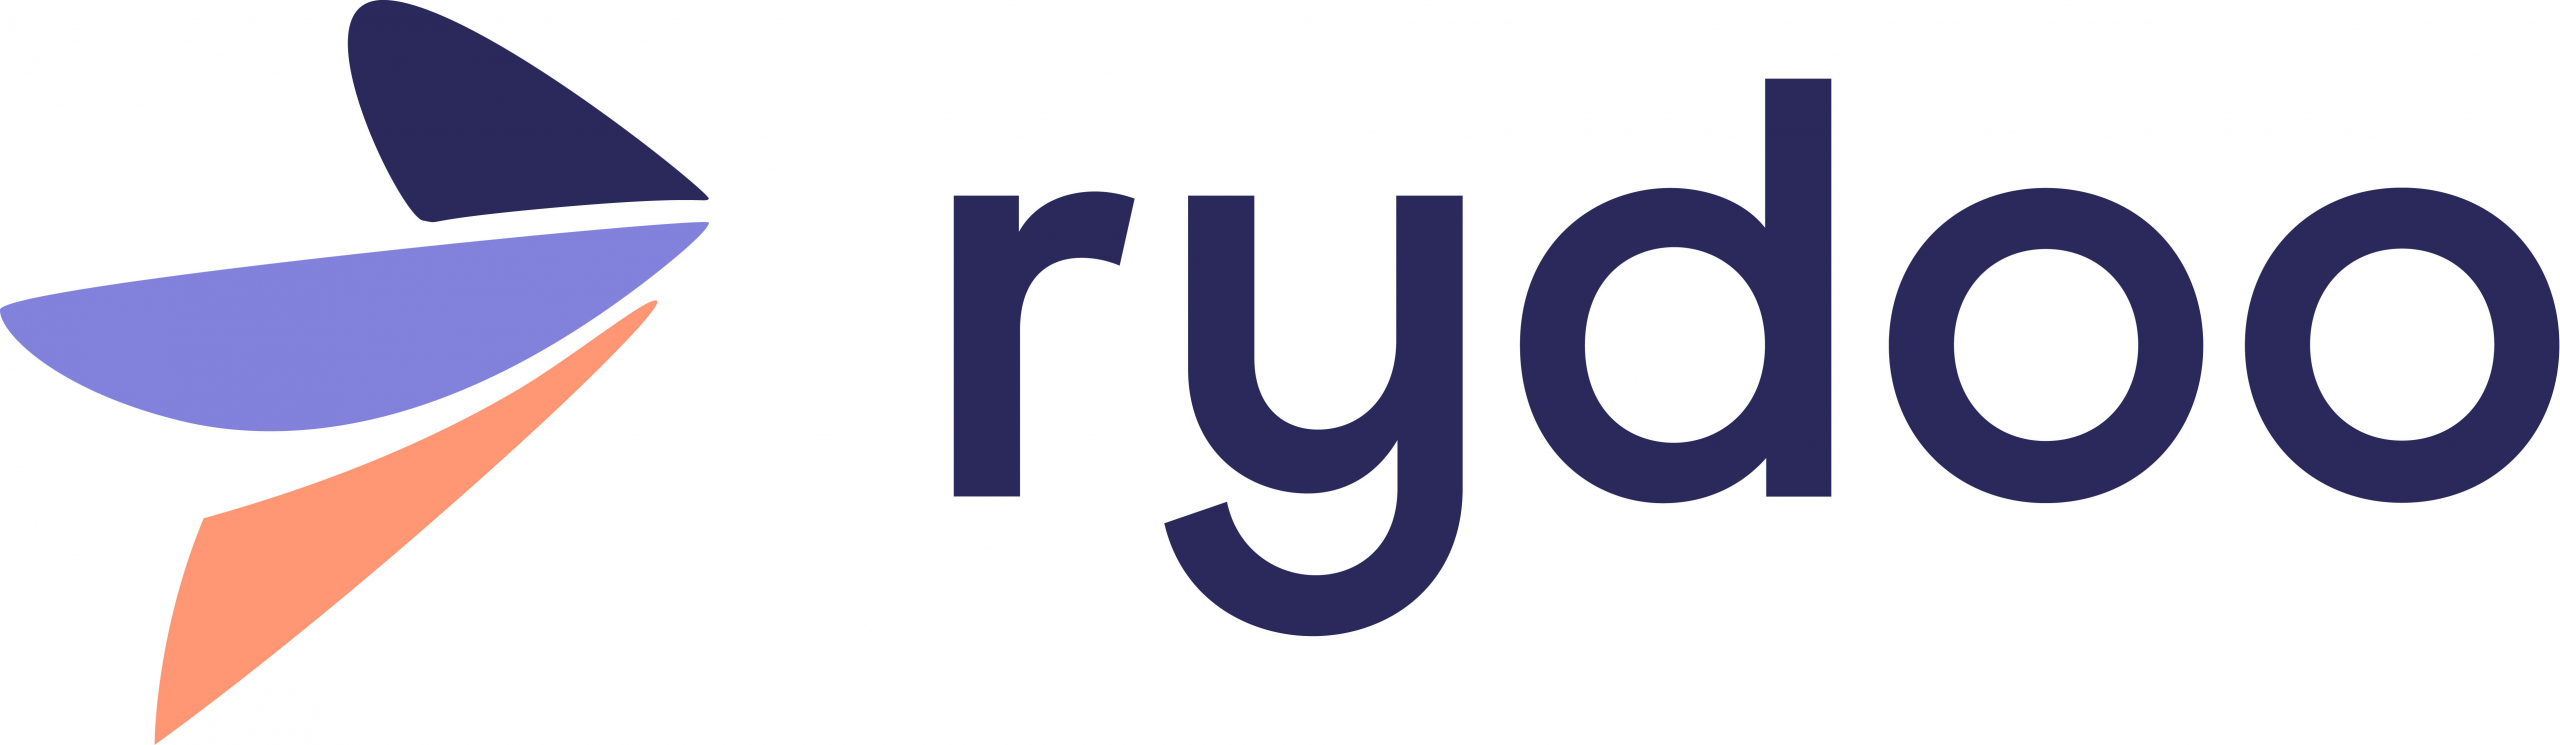 rydoo logo 2019 5c58abbbc2751